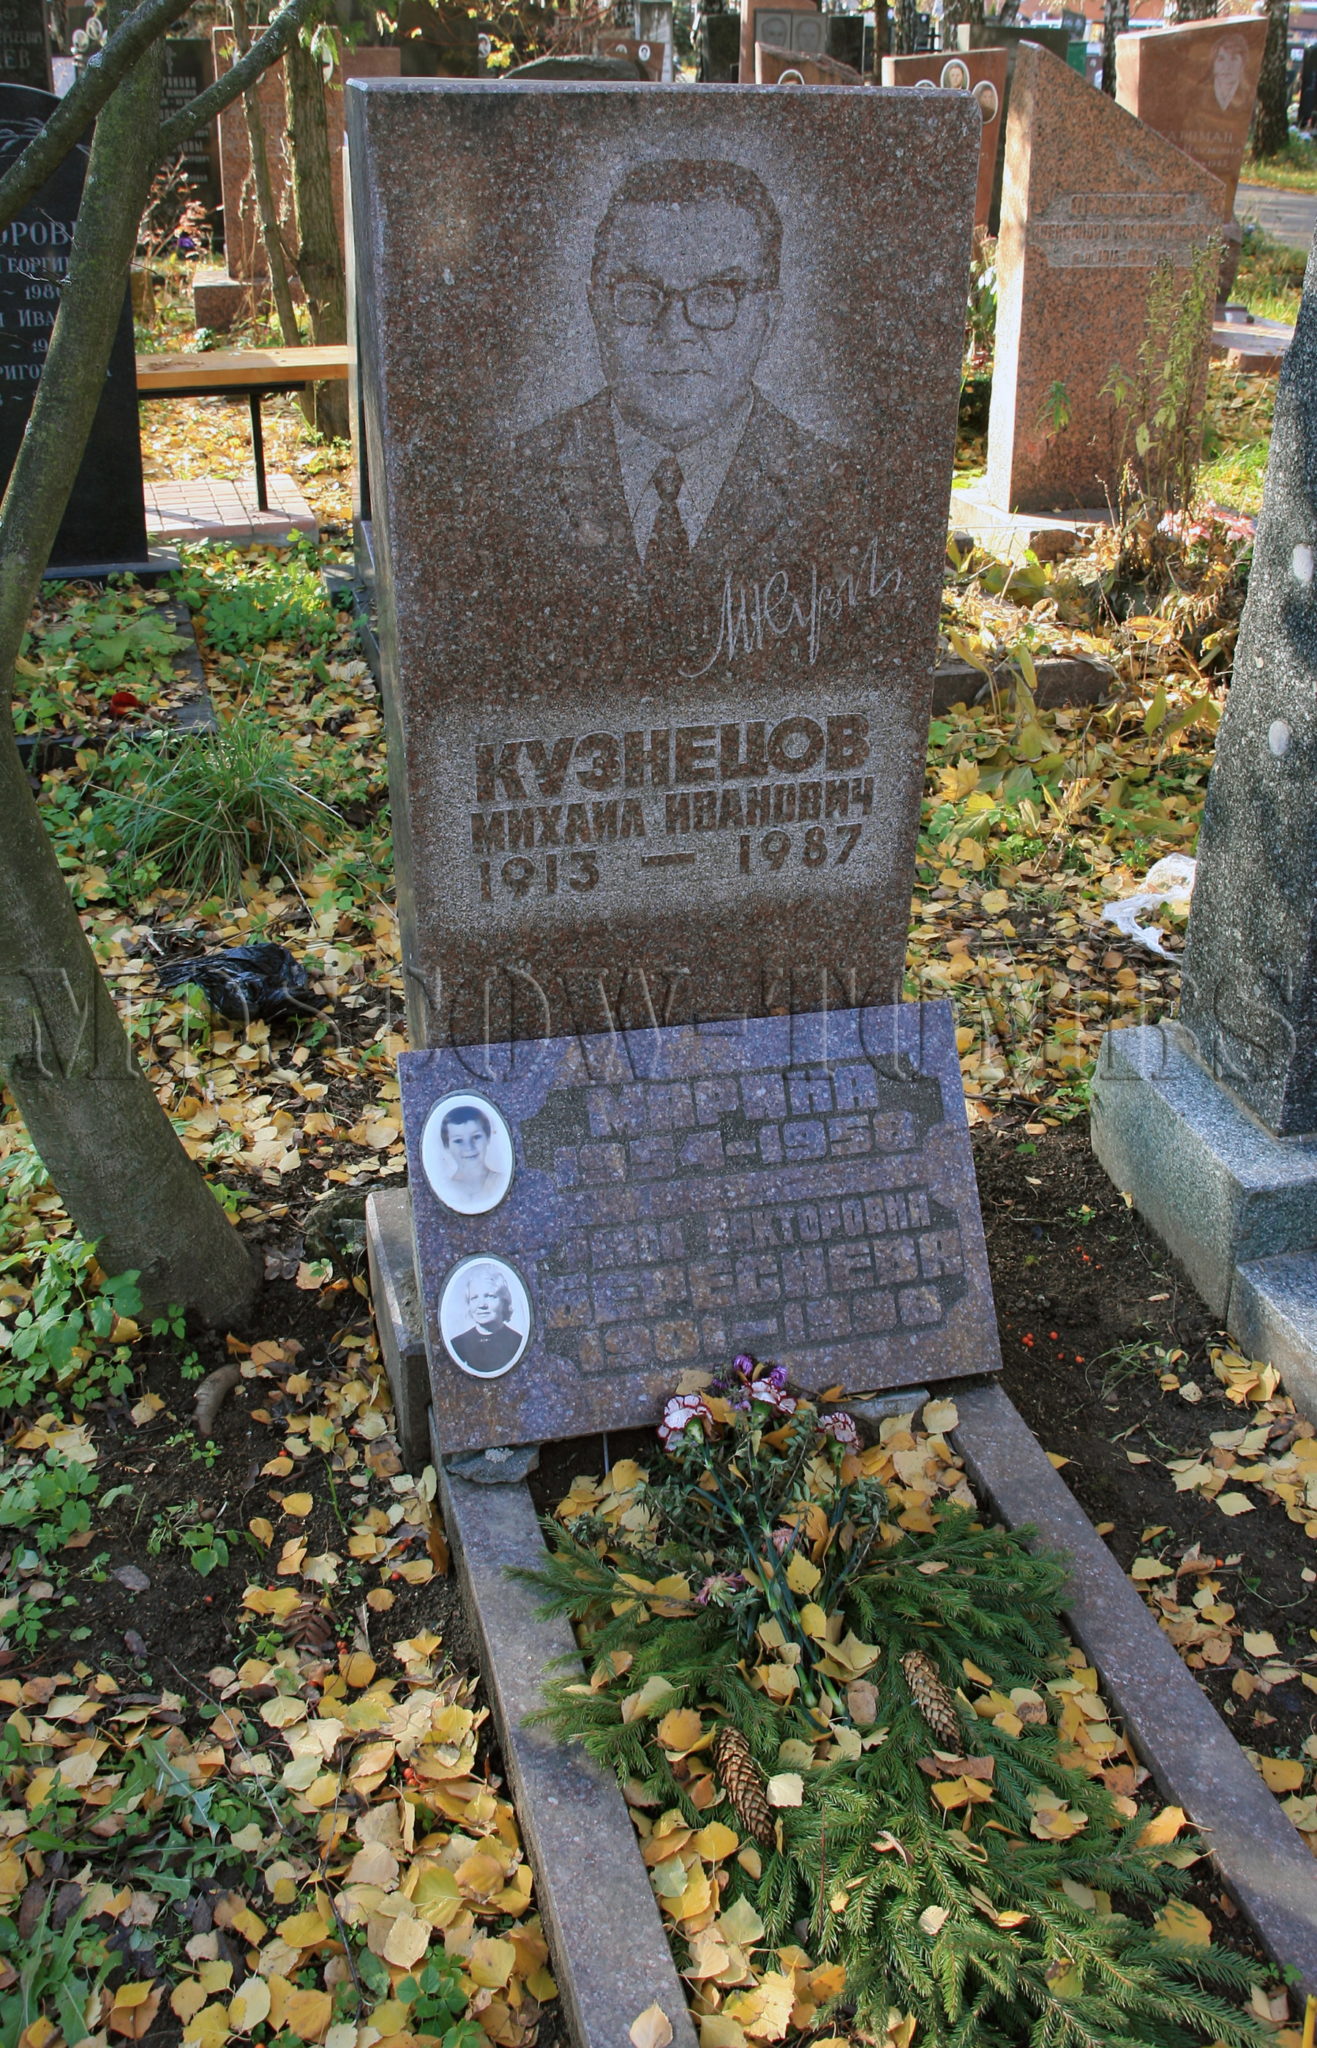 Кузнецов похоронен. Могила Михаила Кузнецова.